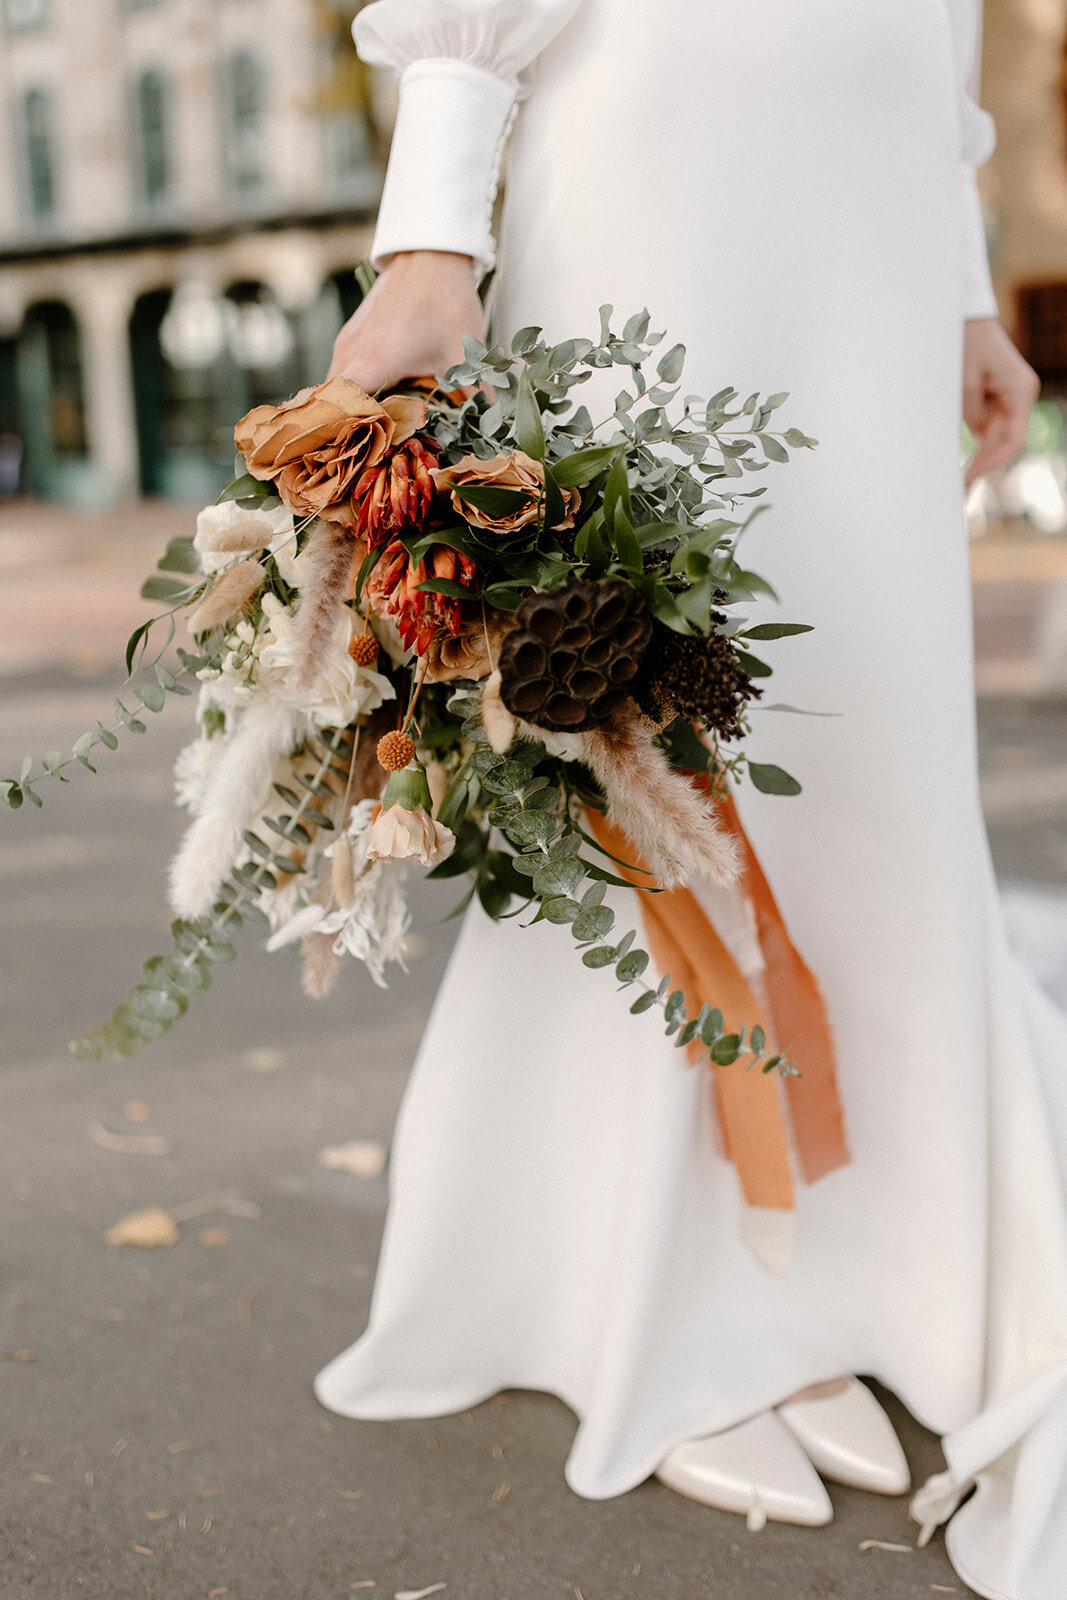 bride holding a flower bouquet with autumn colors